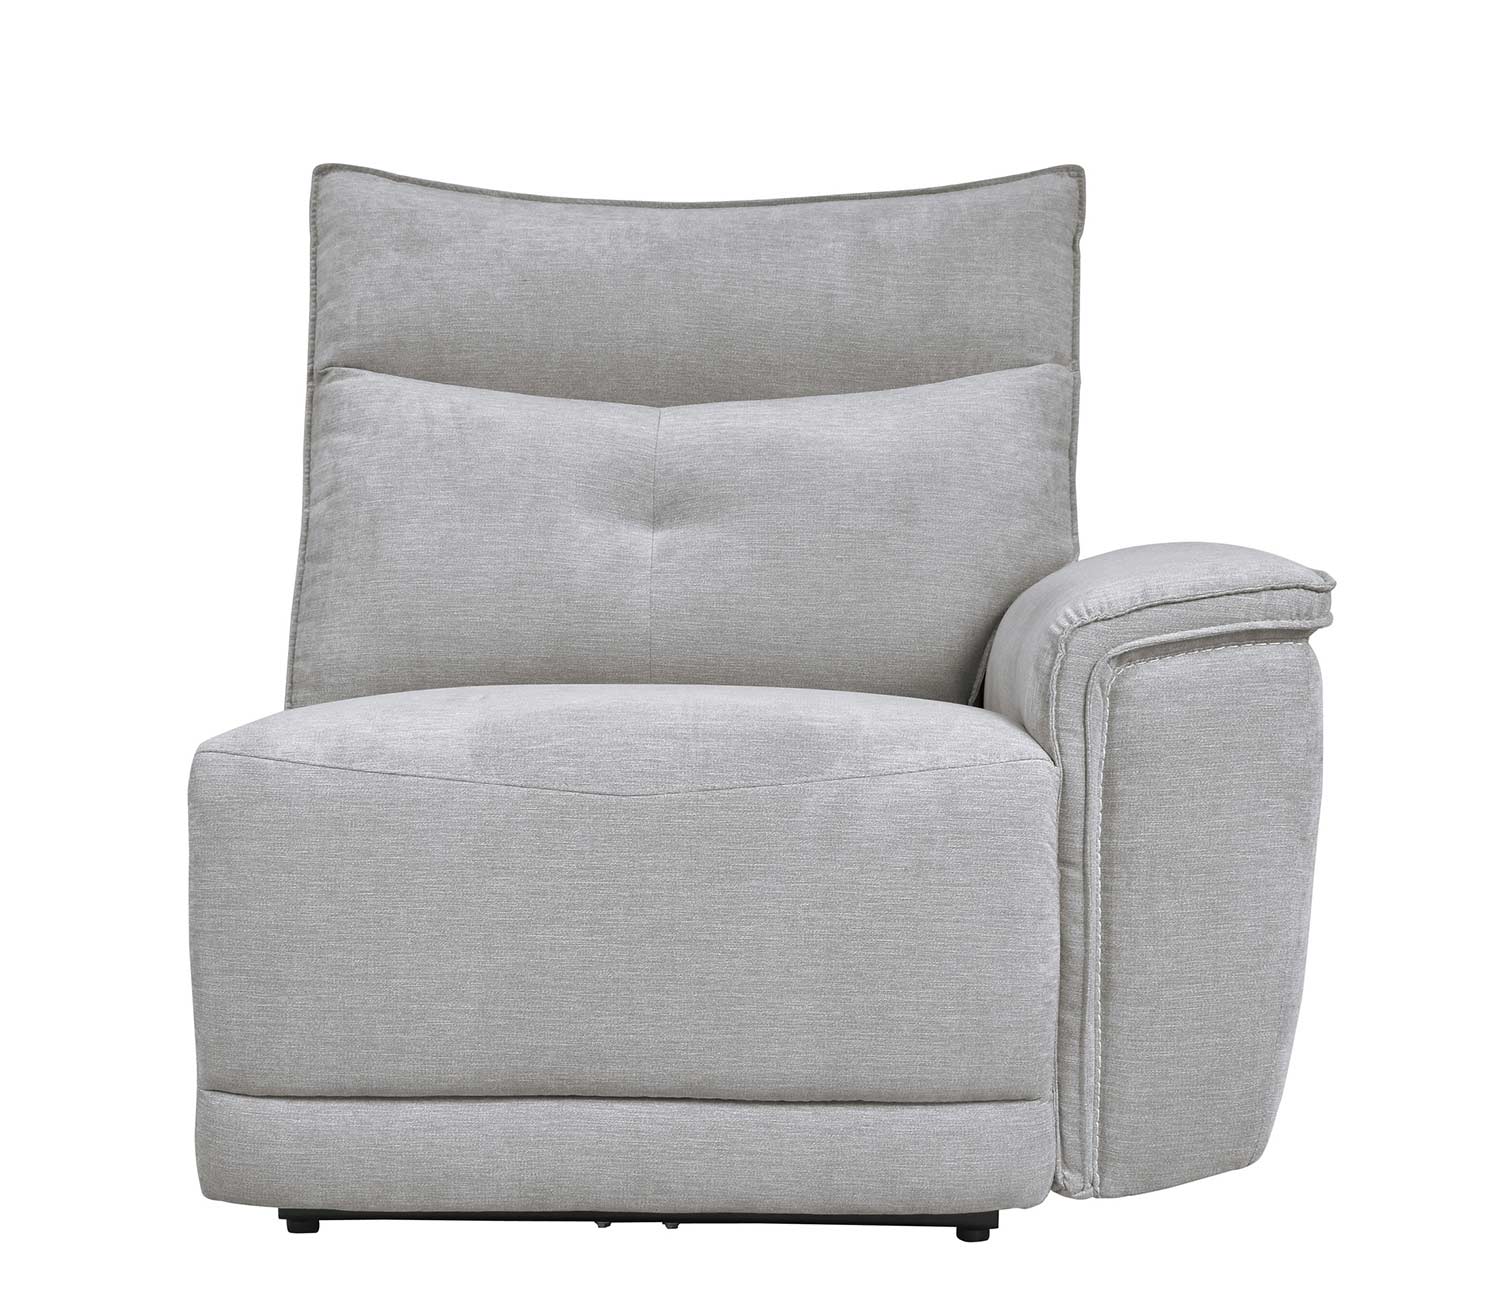 Homelegance Tesoro Right Side Reclining Chair - Mist Gray